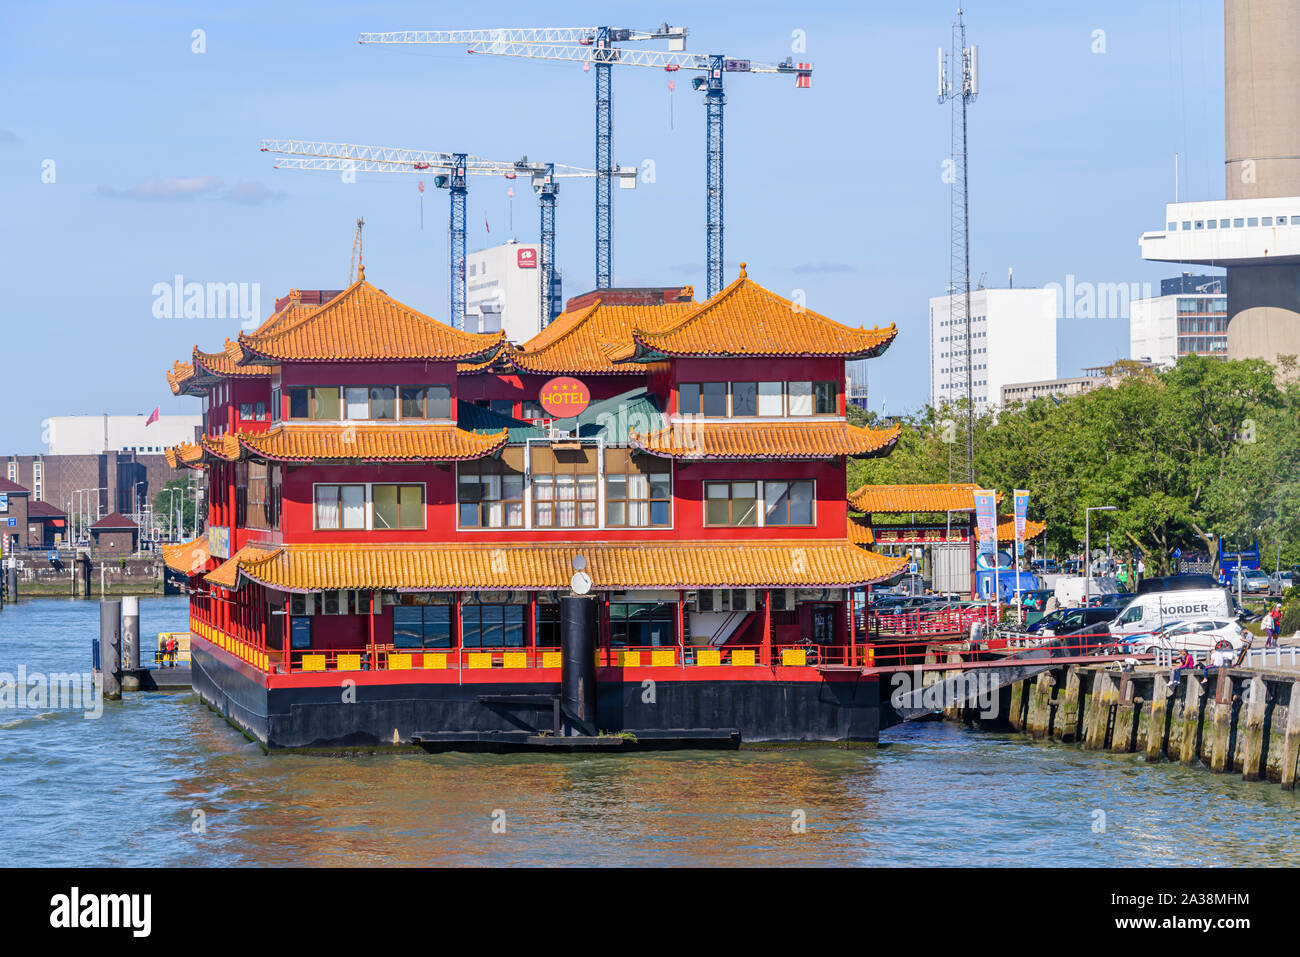 New Ocean Paradise floating Chinese hotel and restaurant, Rotterdam, Netherlands. Stock Photo